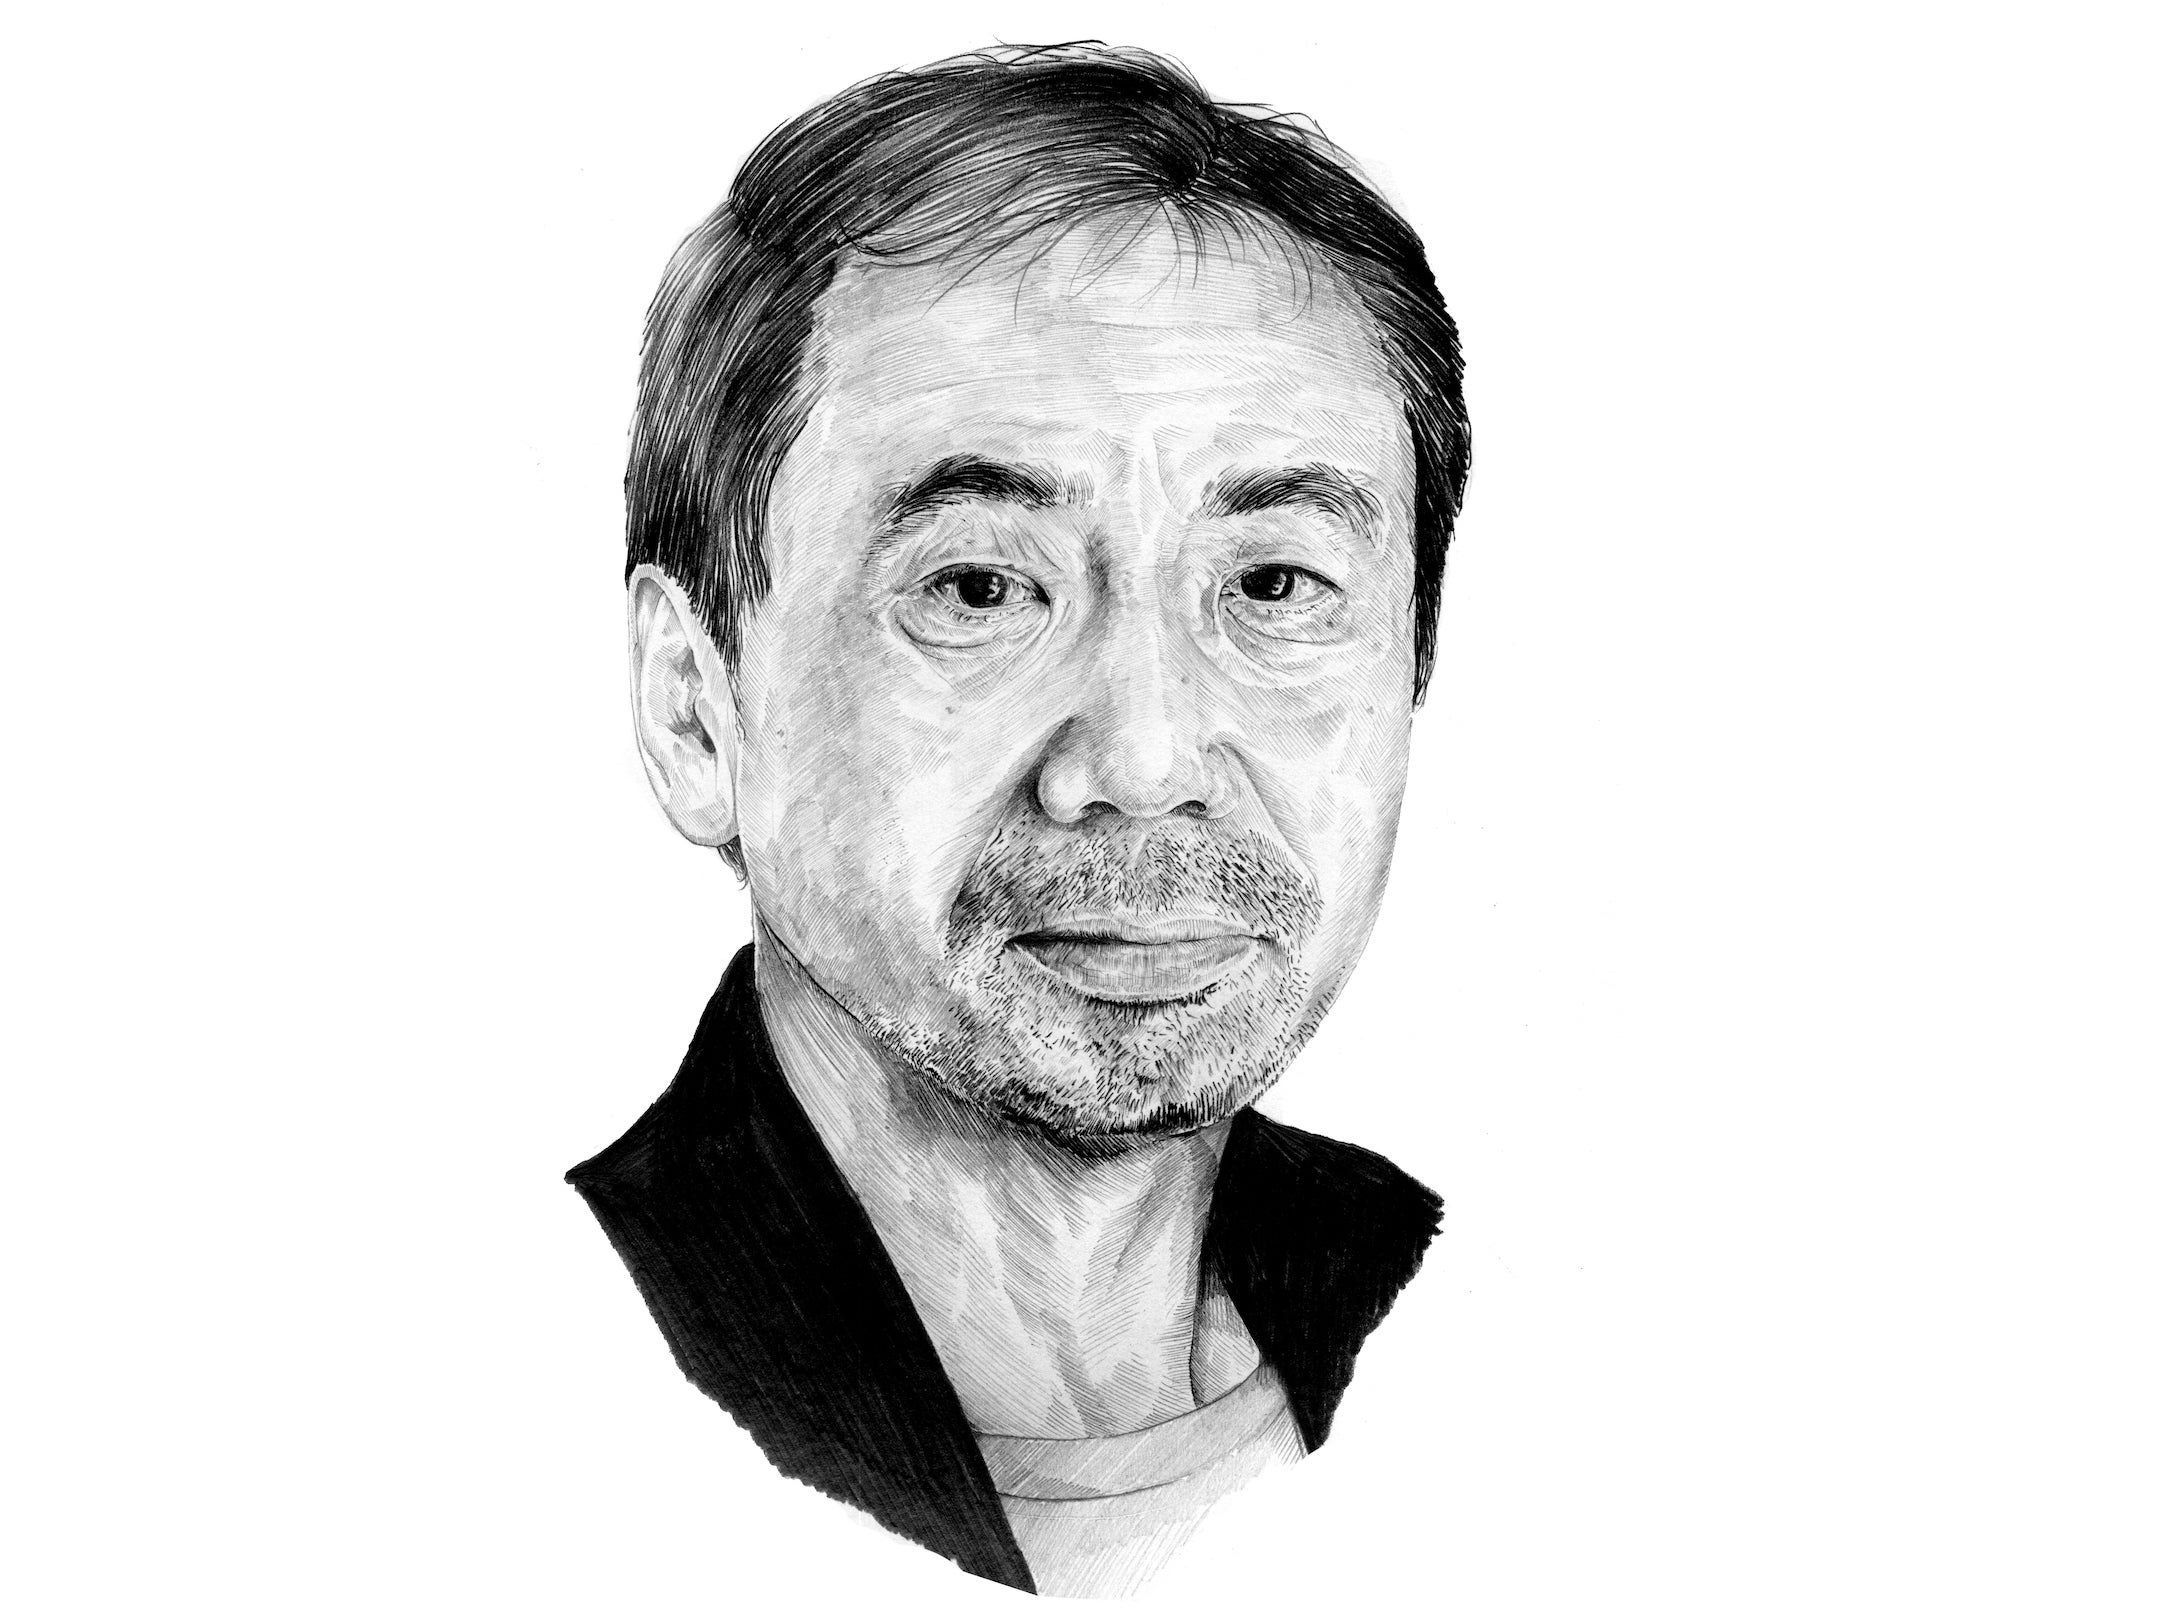 Haruki Murakami profile: An everyman for our times